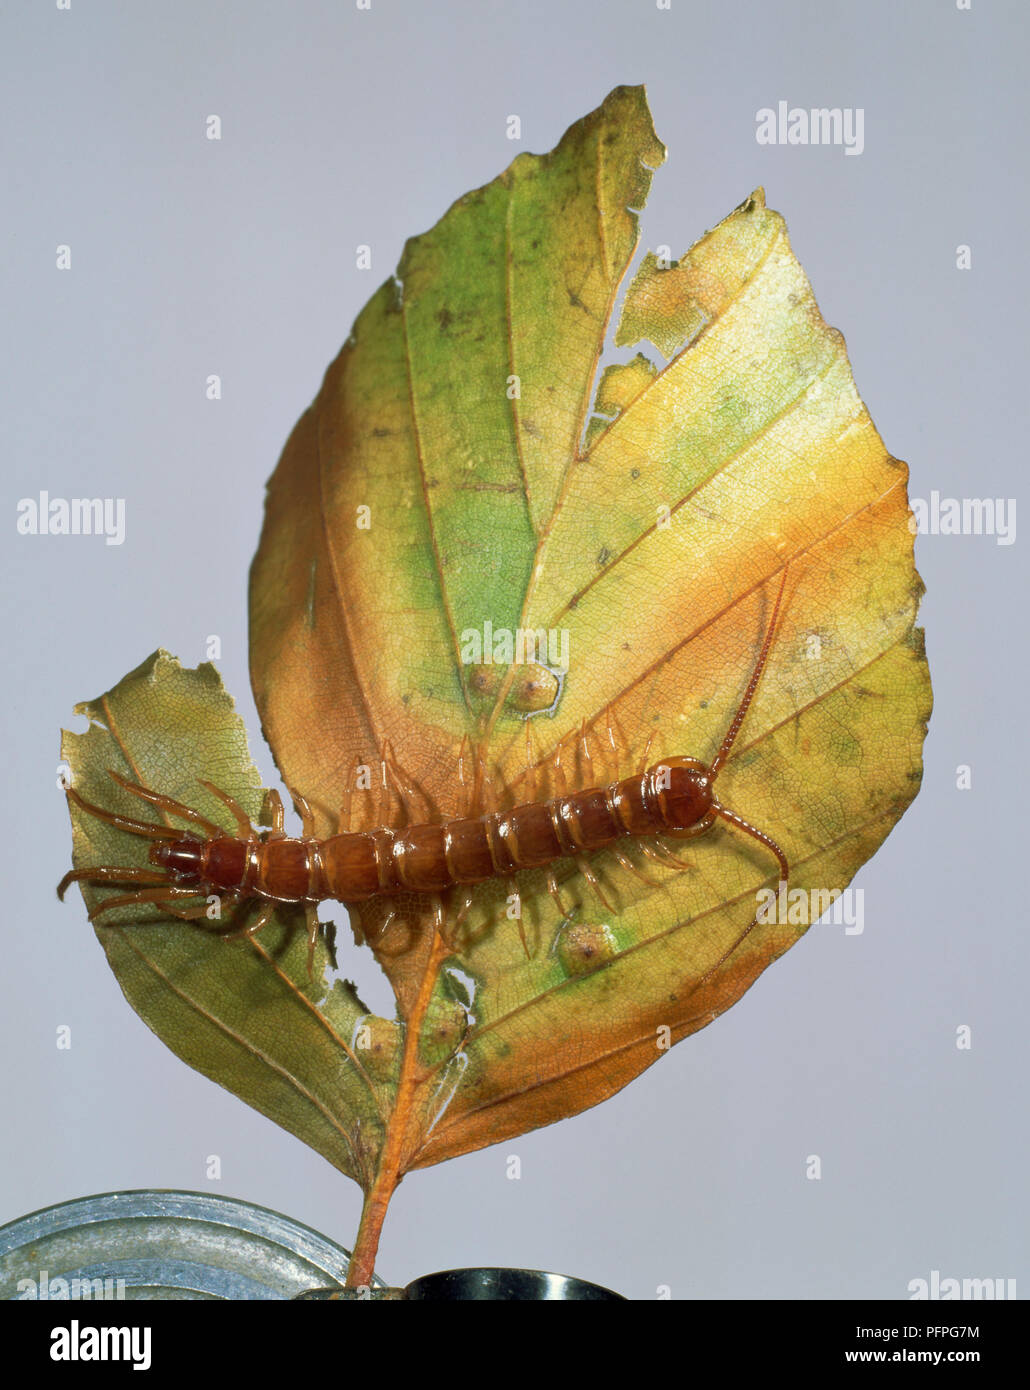 Común (Lithobius forficatus ciempiés) en un decadente leaf Foto de stock